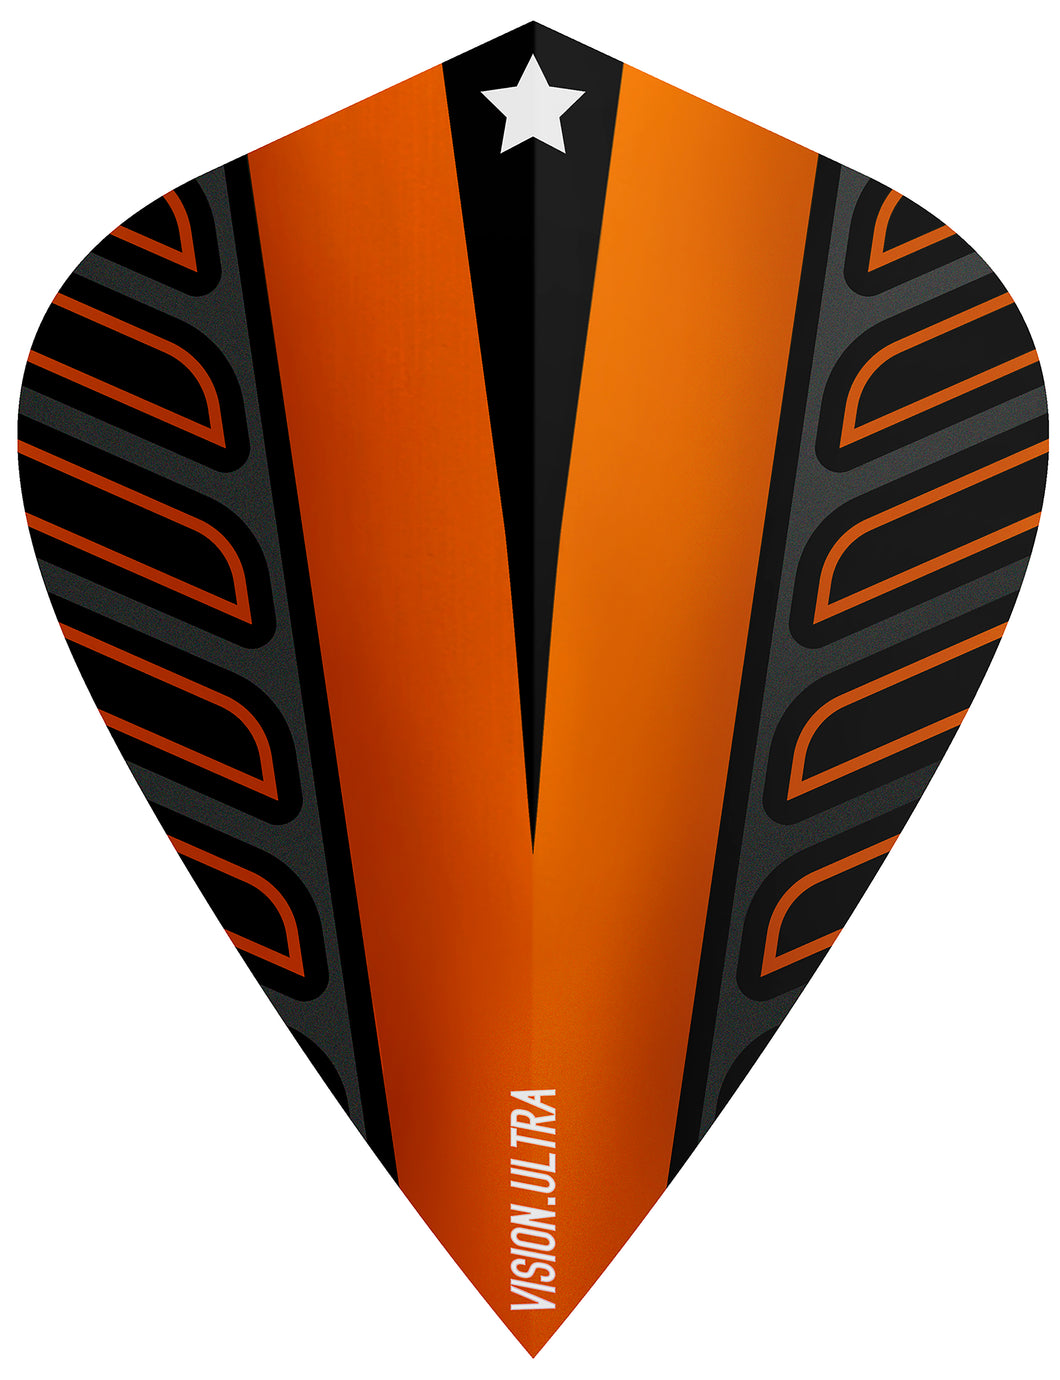 Target Rob Cross Voltage Vision Ultra Orange Kite Flights